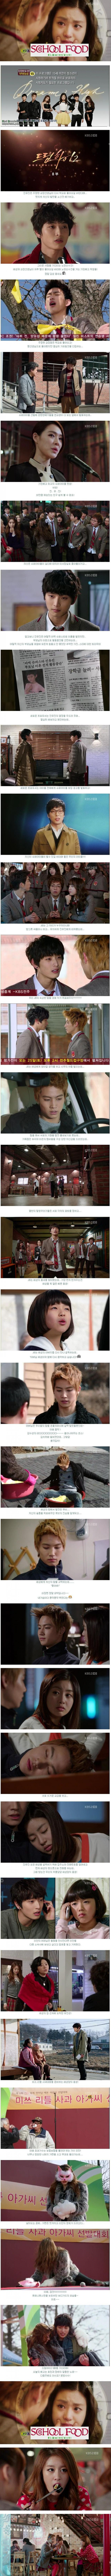 episode 8 captures for the Korean drama 'Dream High 2'